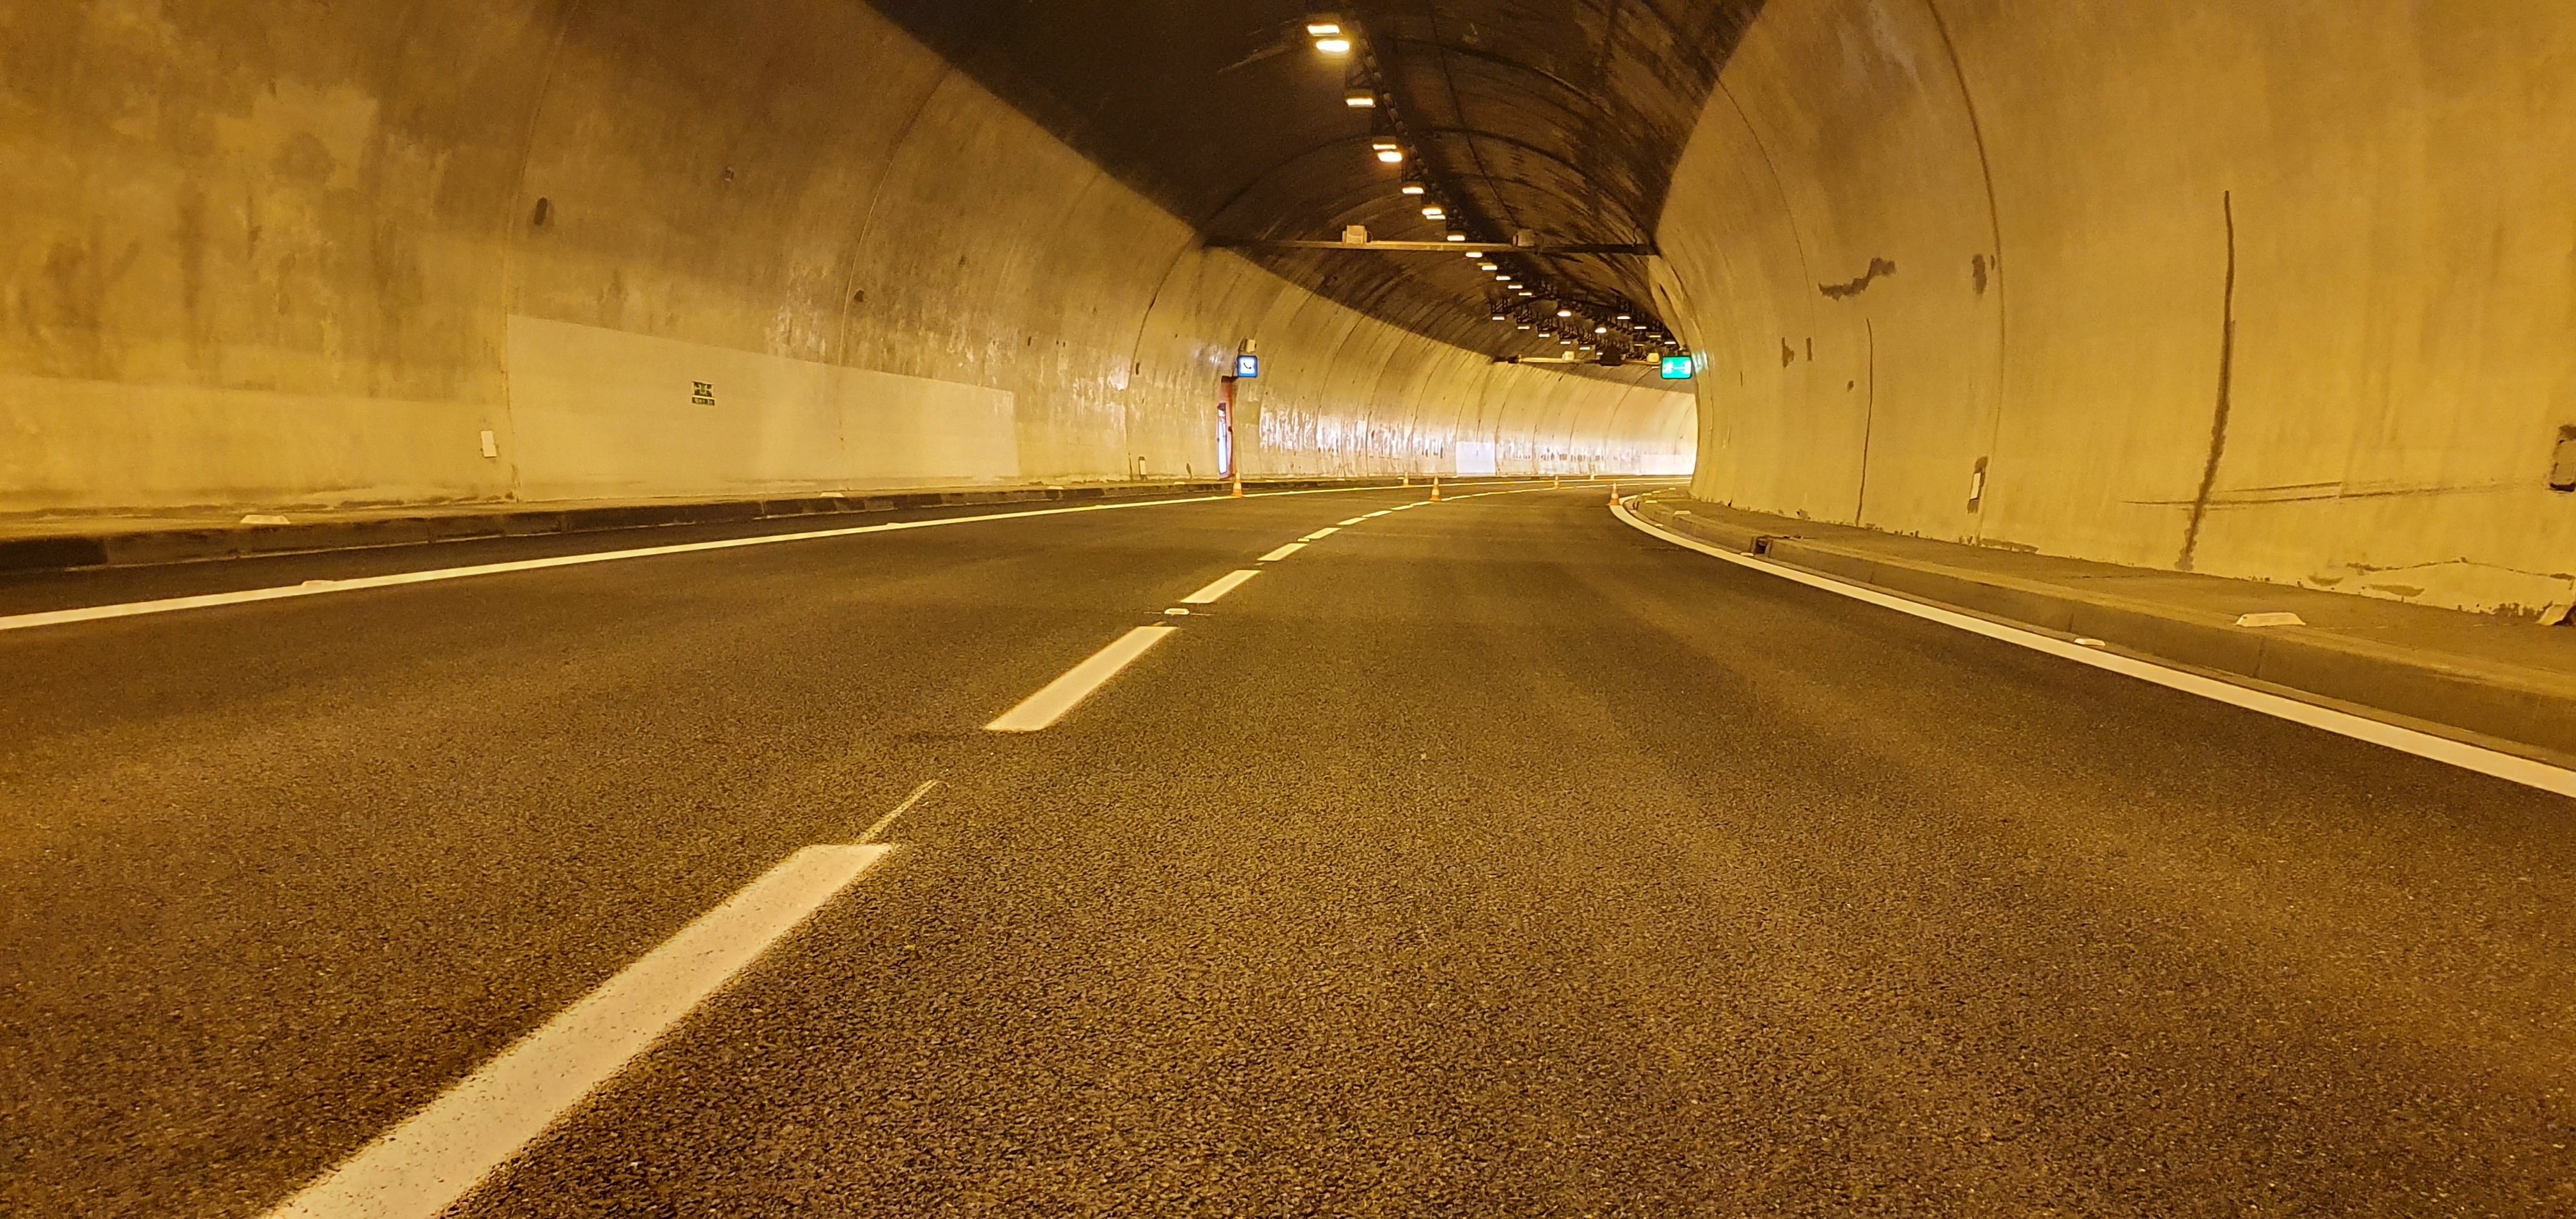 Silnice I/23 – rekonstrukce Pisáreckého tunelu - Straßen- und Brückenbau